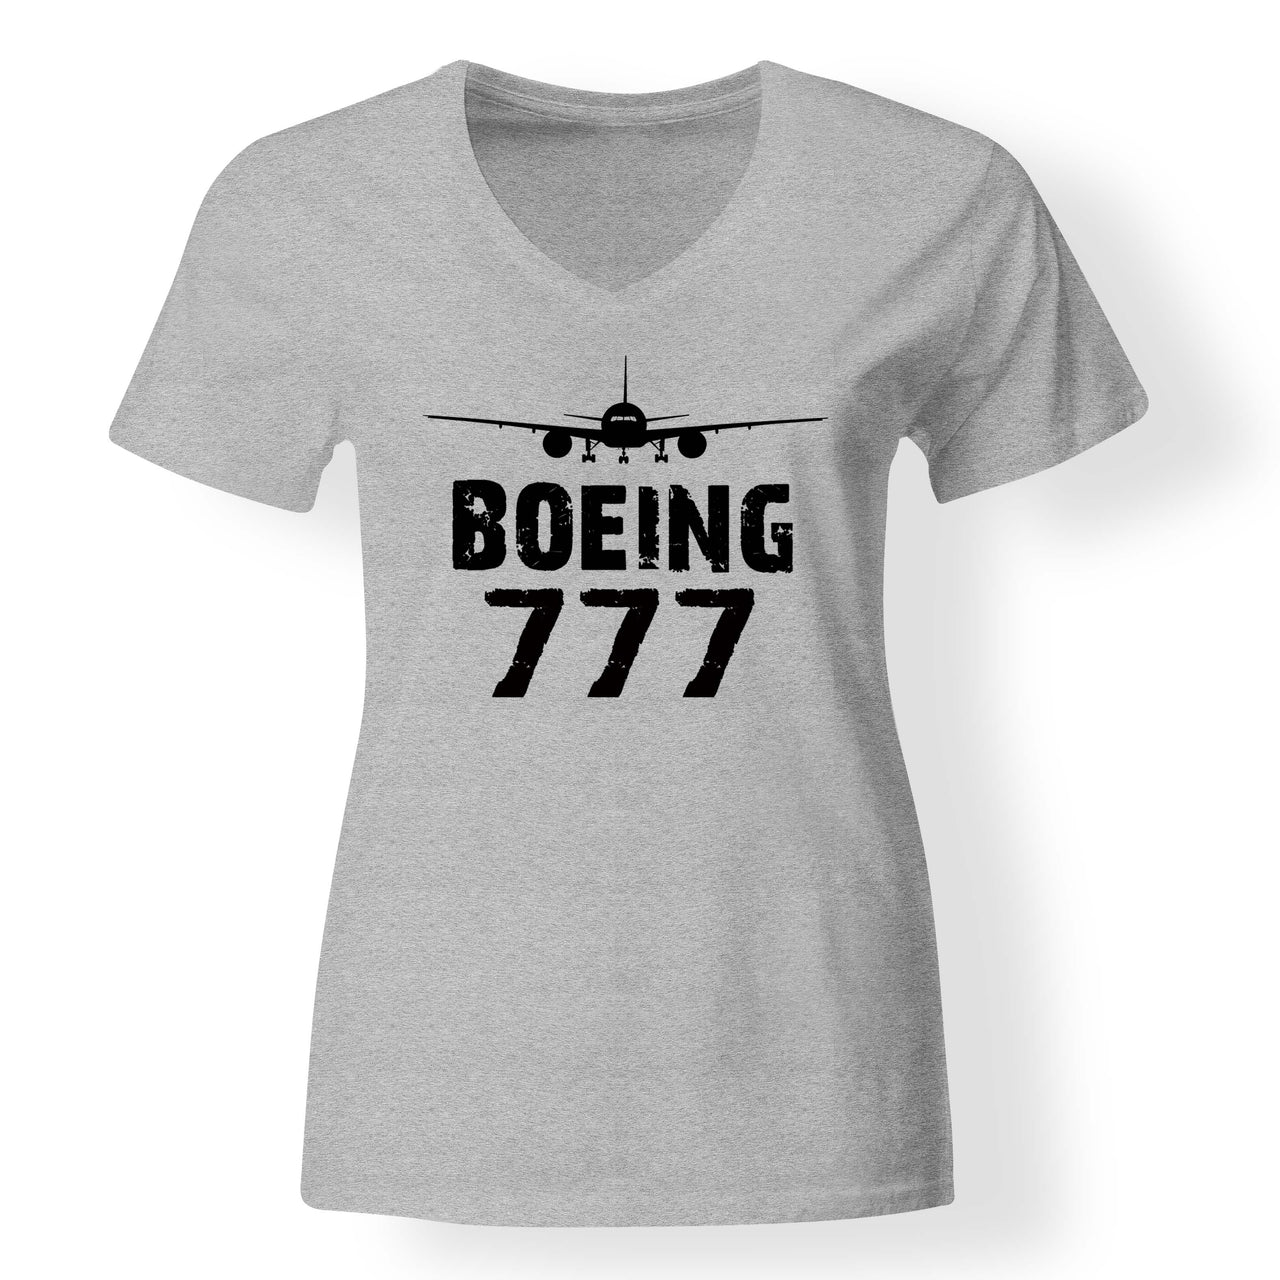 Boeing 777 & Plane Designed V-Neck T-Shirts